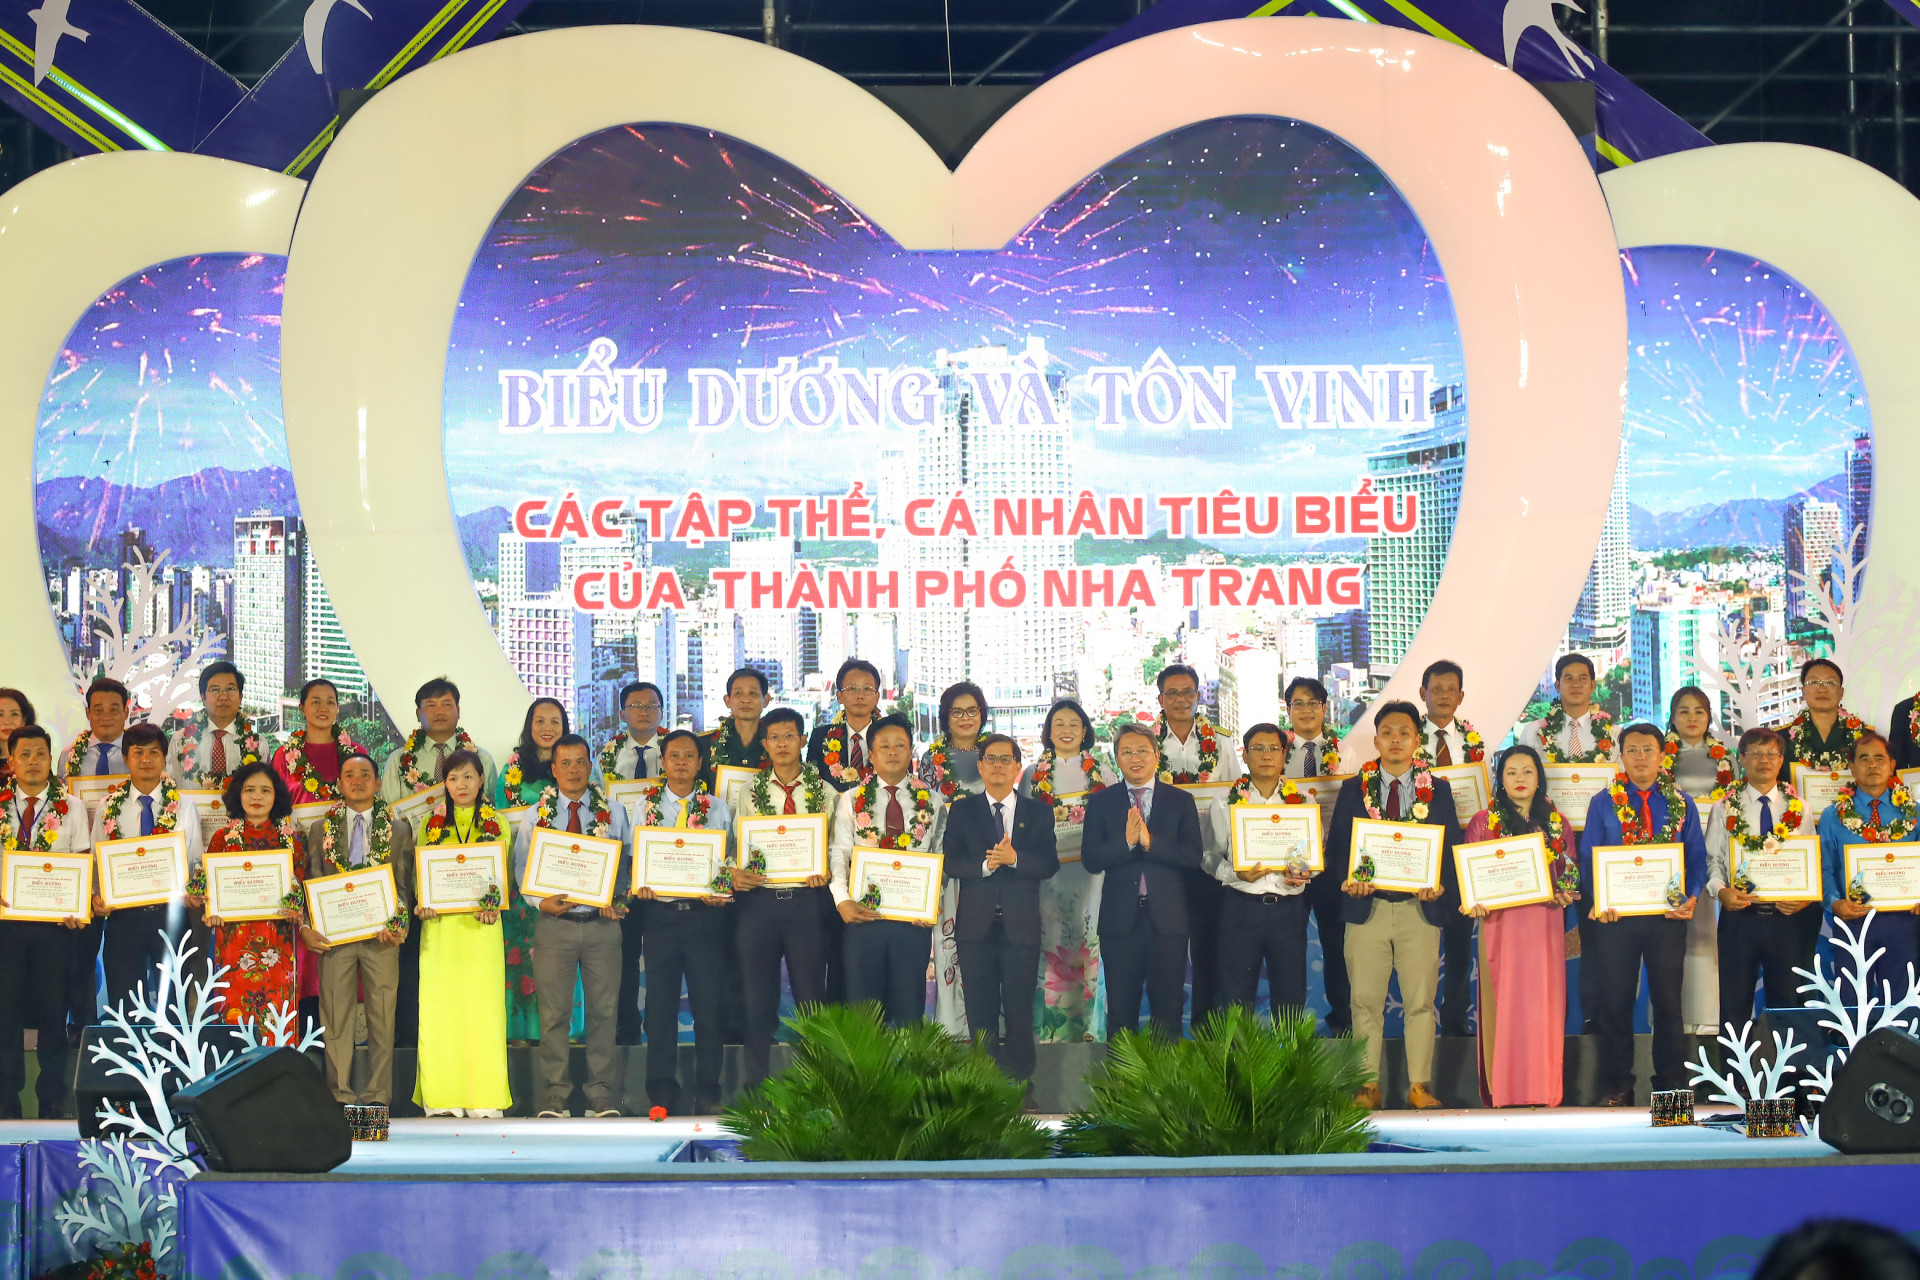 Nguyen Hai Ninh and Nguyen Tan Tuan presenting awards to the representatives of outstanding collectives

